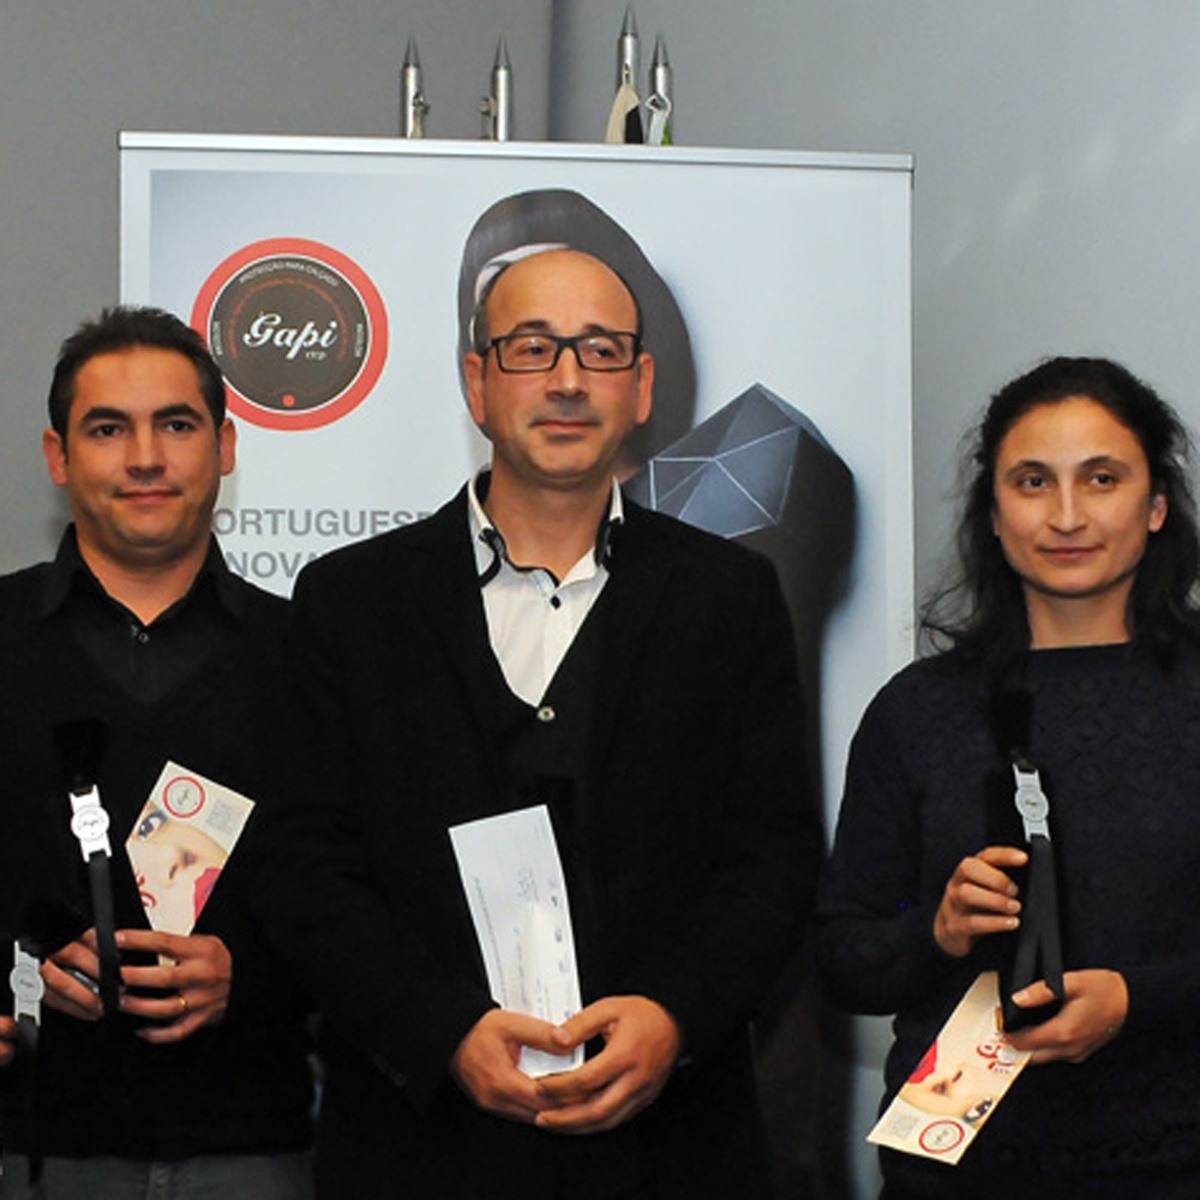 JJHeitor distinguished with the GAPI Innovation Award 2013